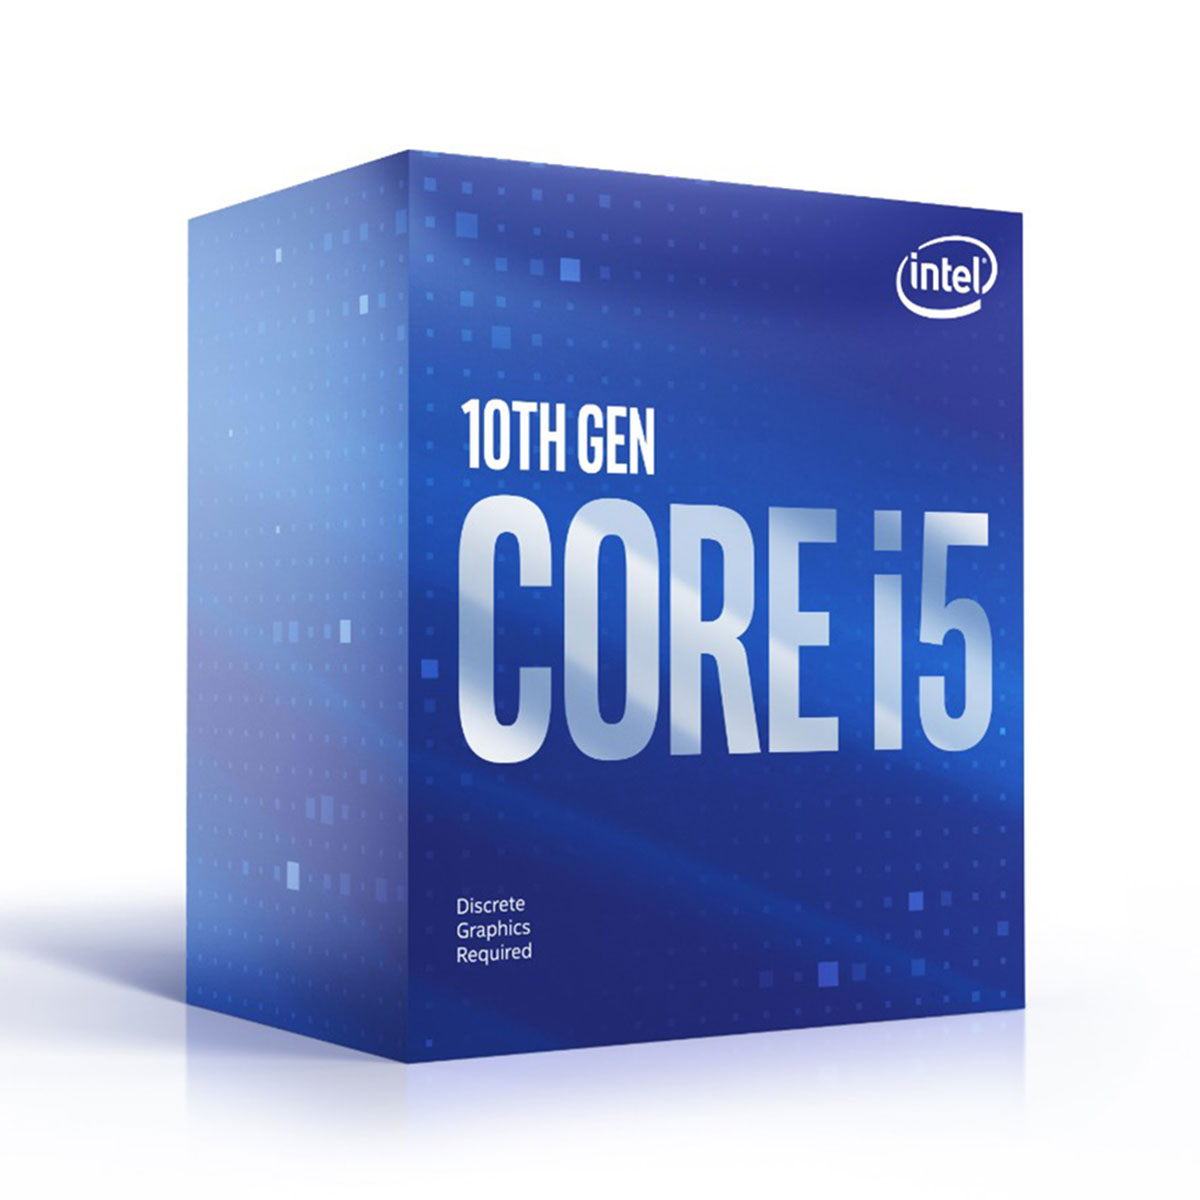 Intel Core i5-10400F 2.90GHz (Comet Lake) Socket LGA1200 Processor - Retail